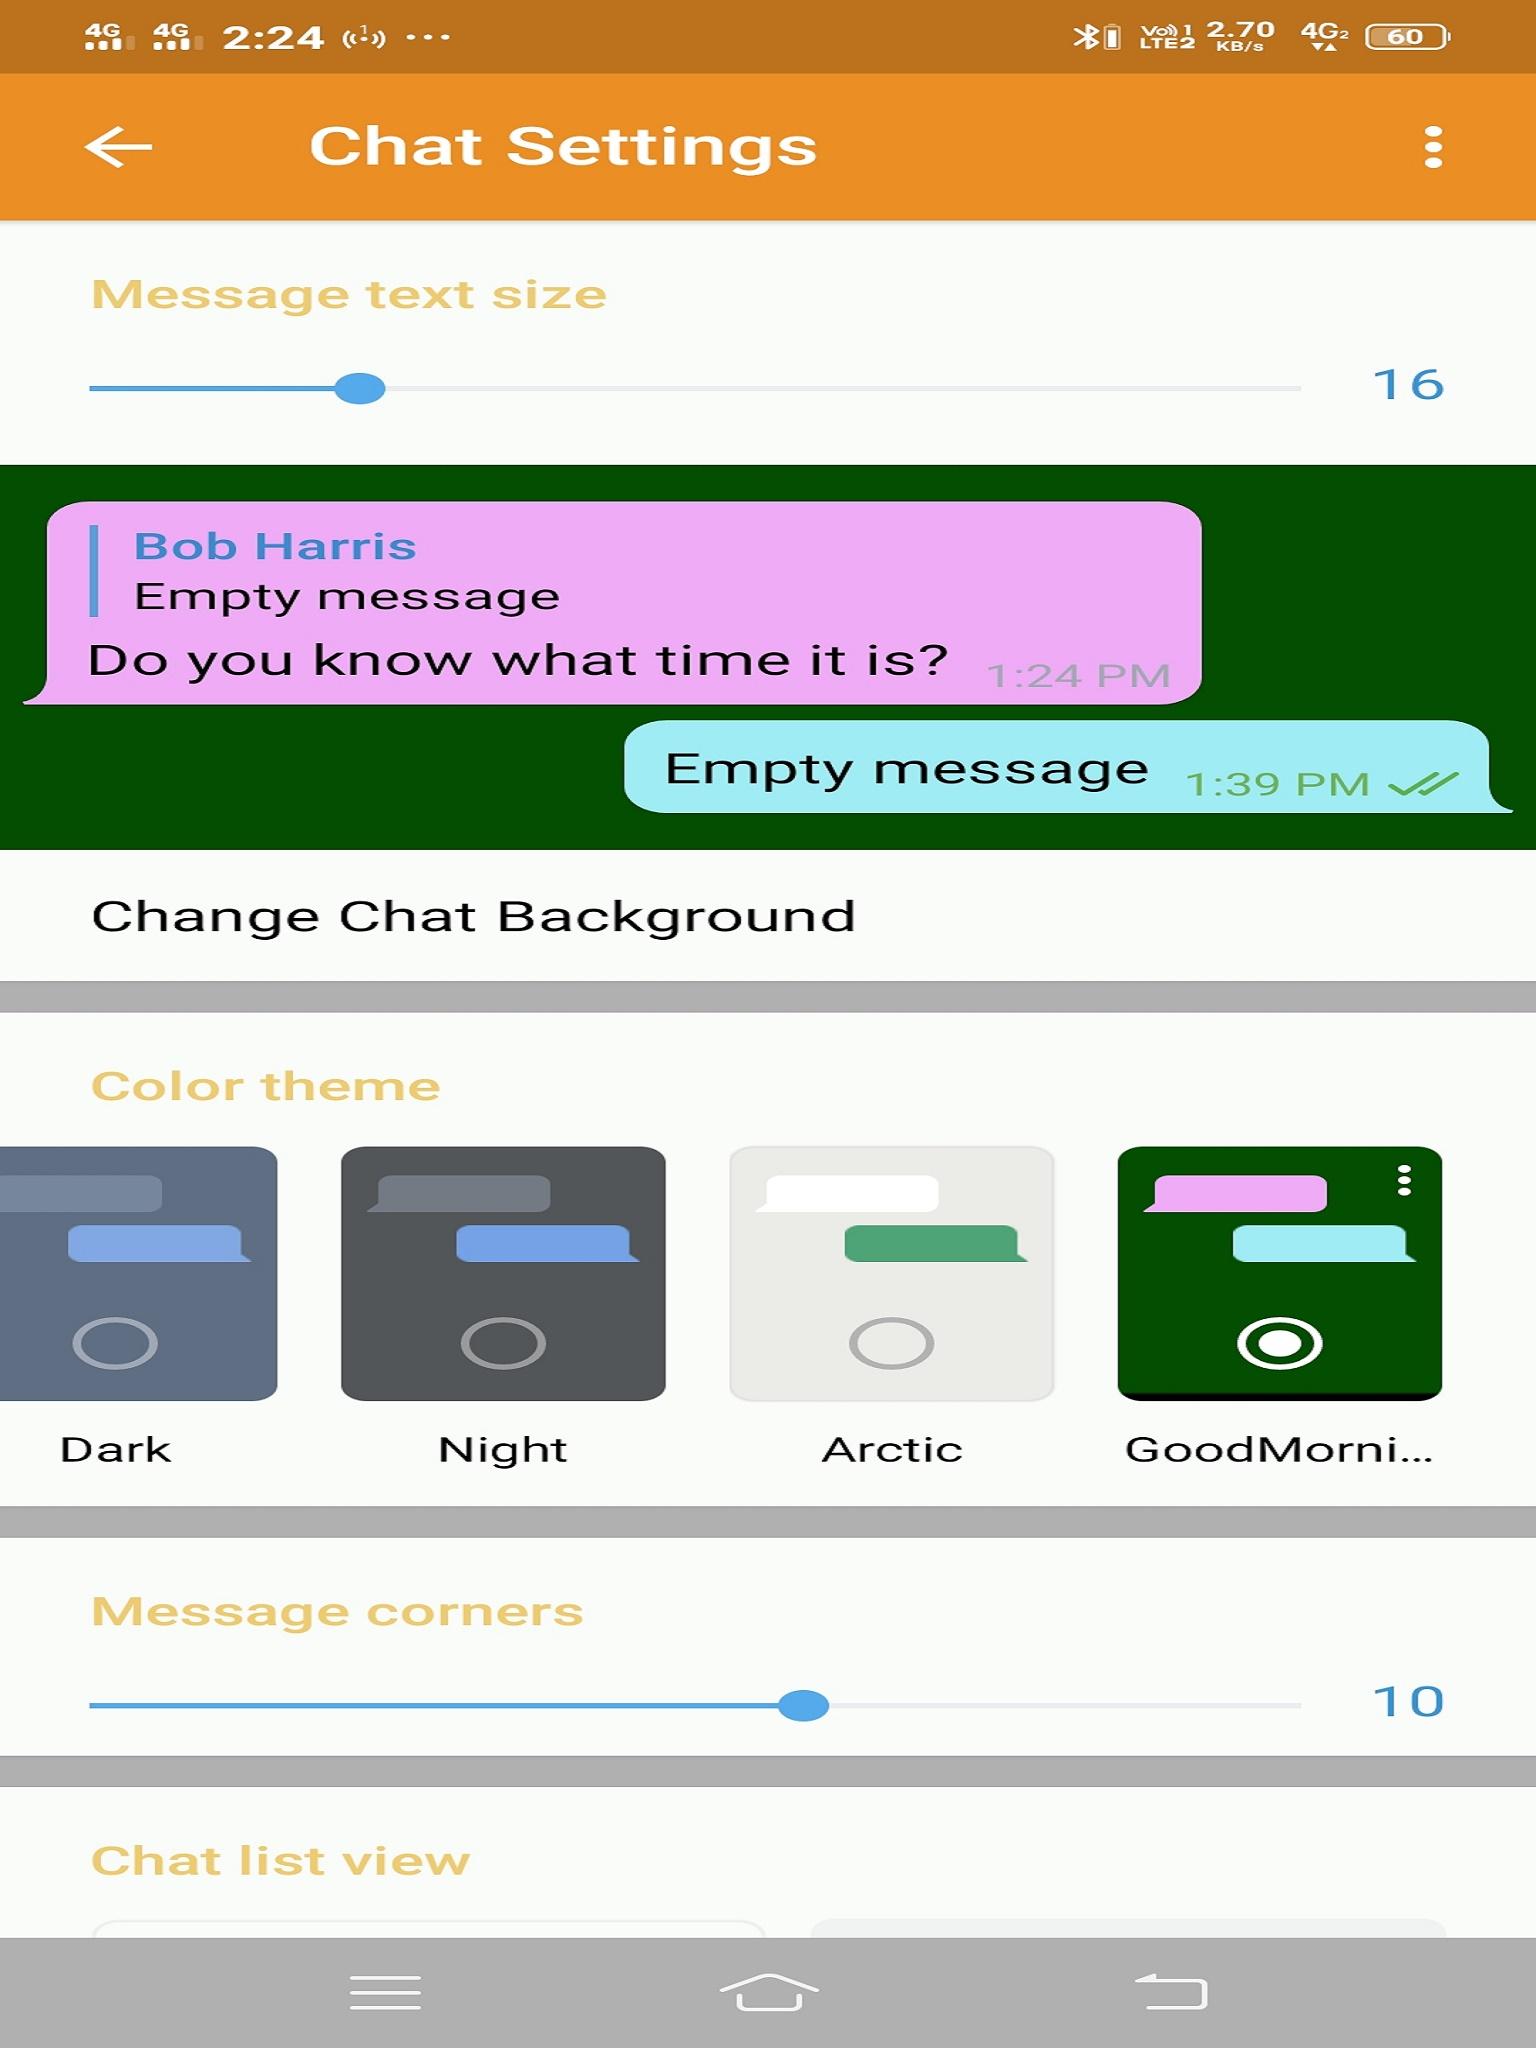 GoodMorning Messenger - New Telegram 1.0.25 Screenshot 6